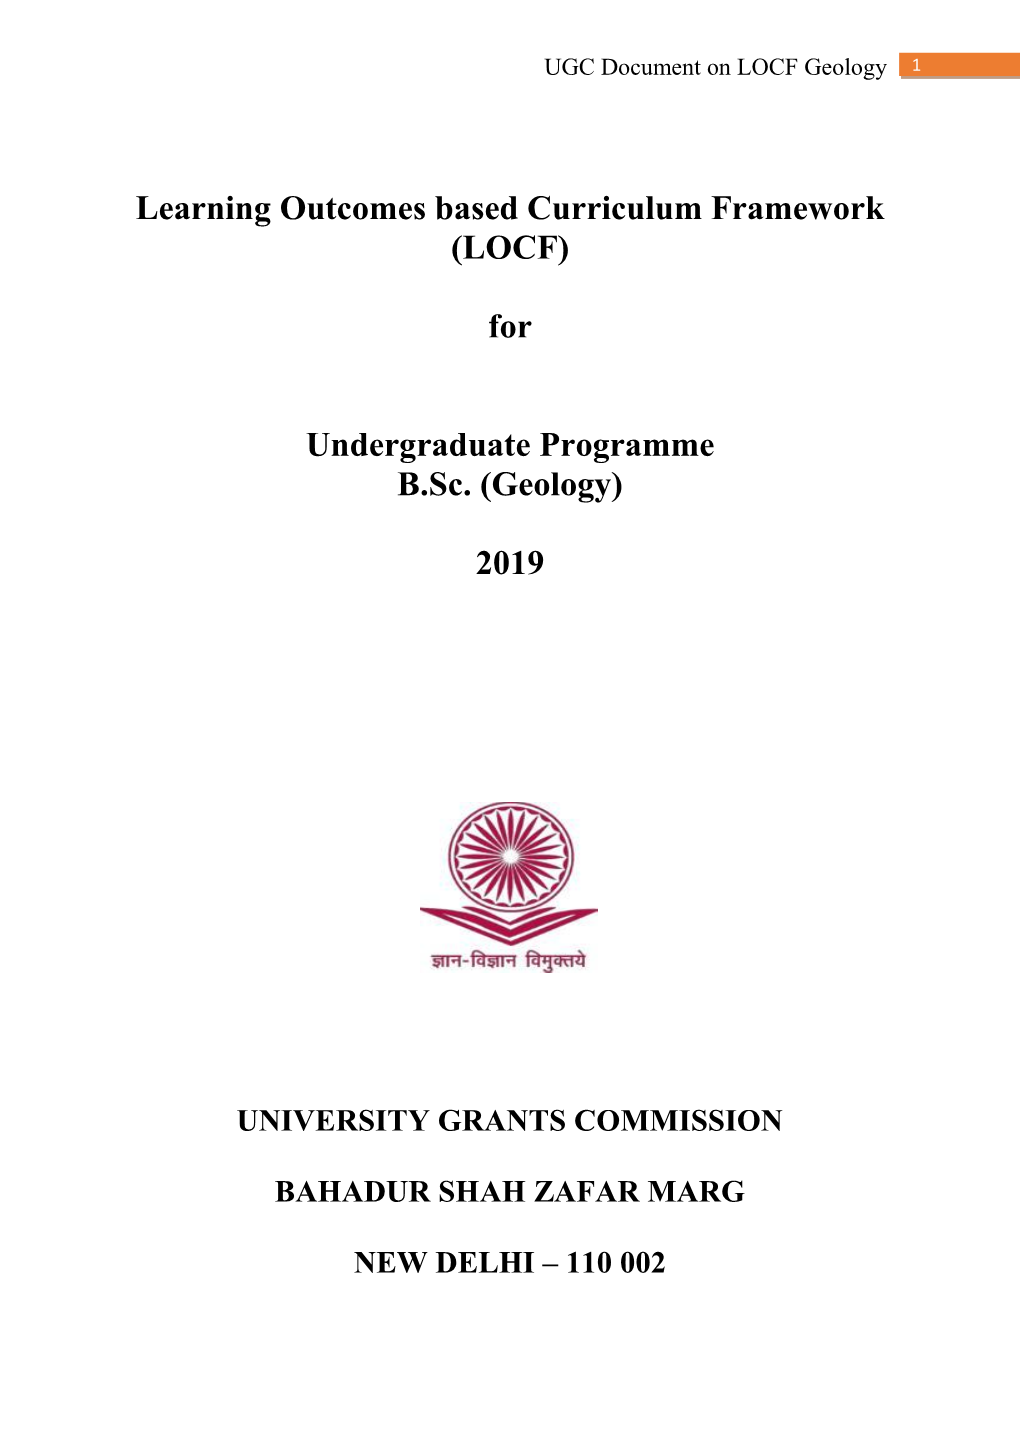 LOCF) for Undergraduate Programme B.Sc. (Geology